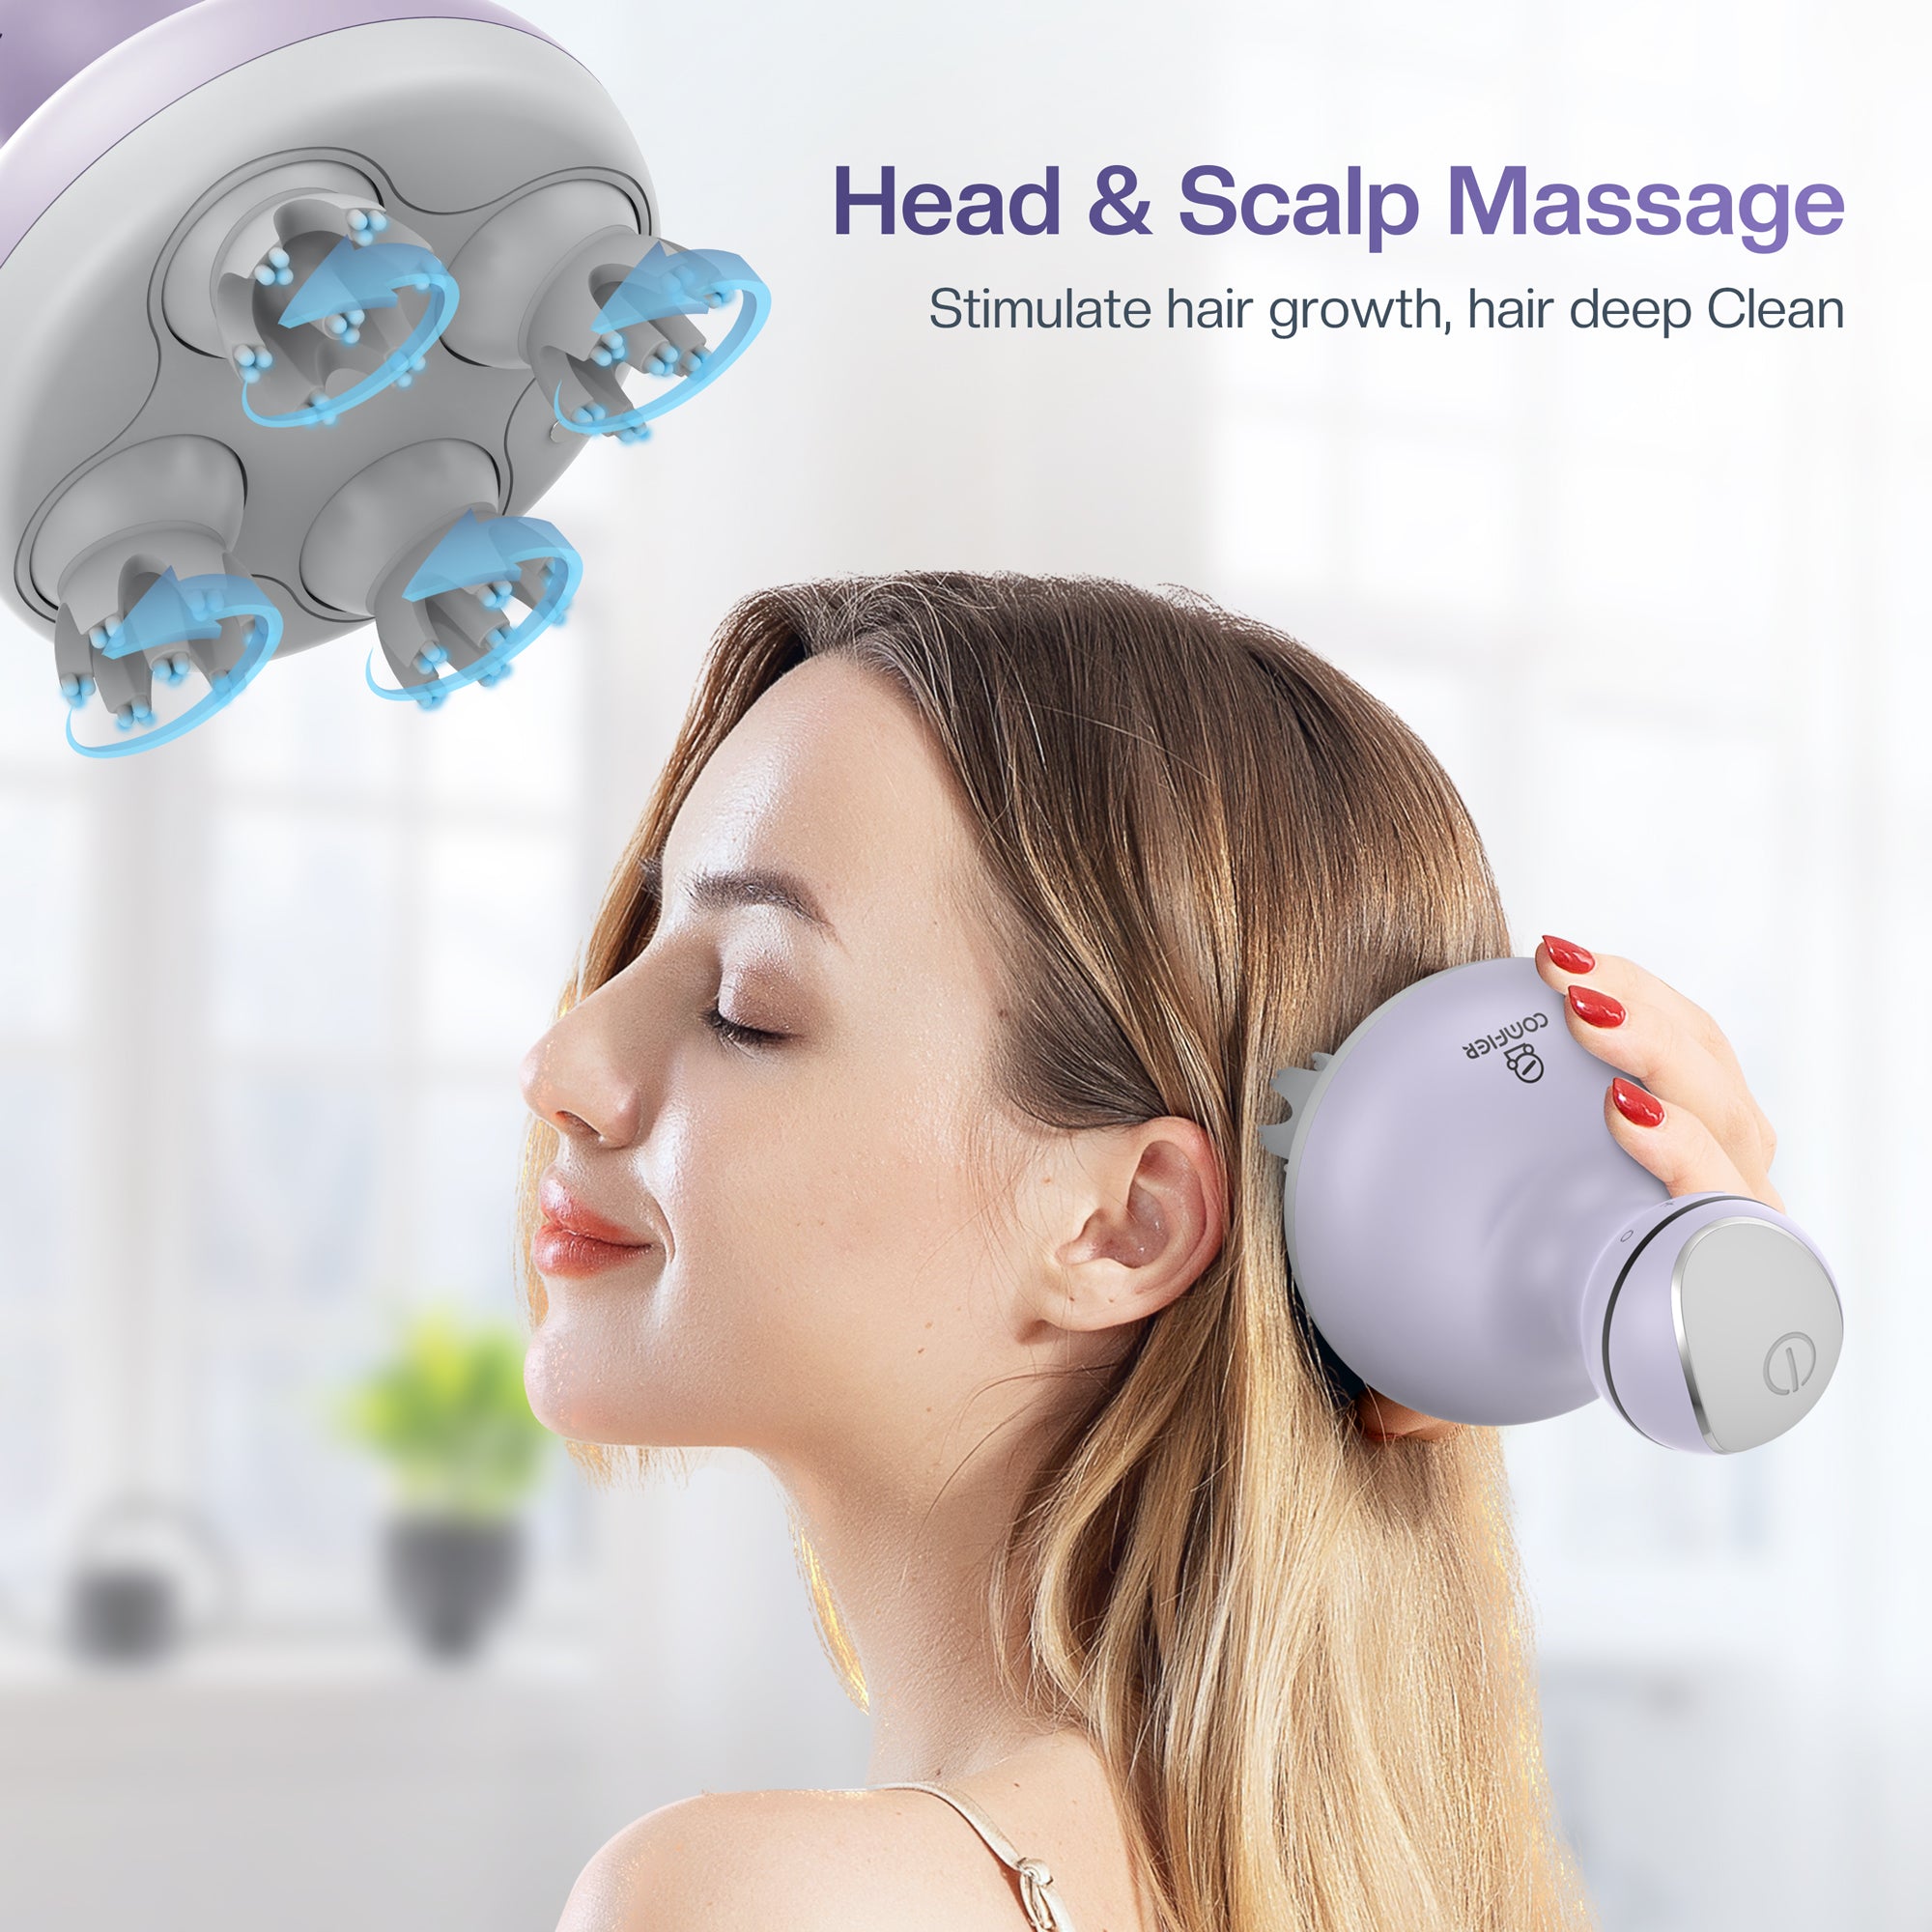 Comfier Cordless Hair Scalp Massager,head massager for Hair Growth, Deep Clean and Stress Relax (PURPLE) - 4902P